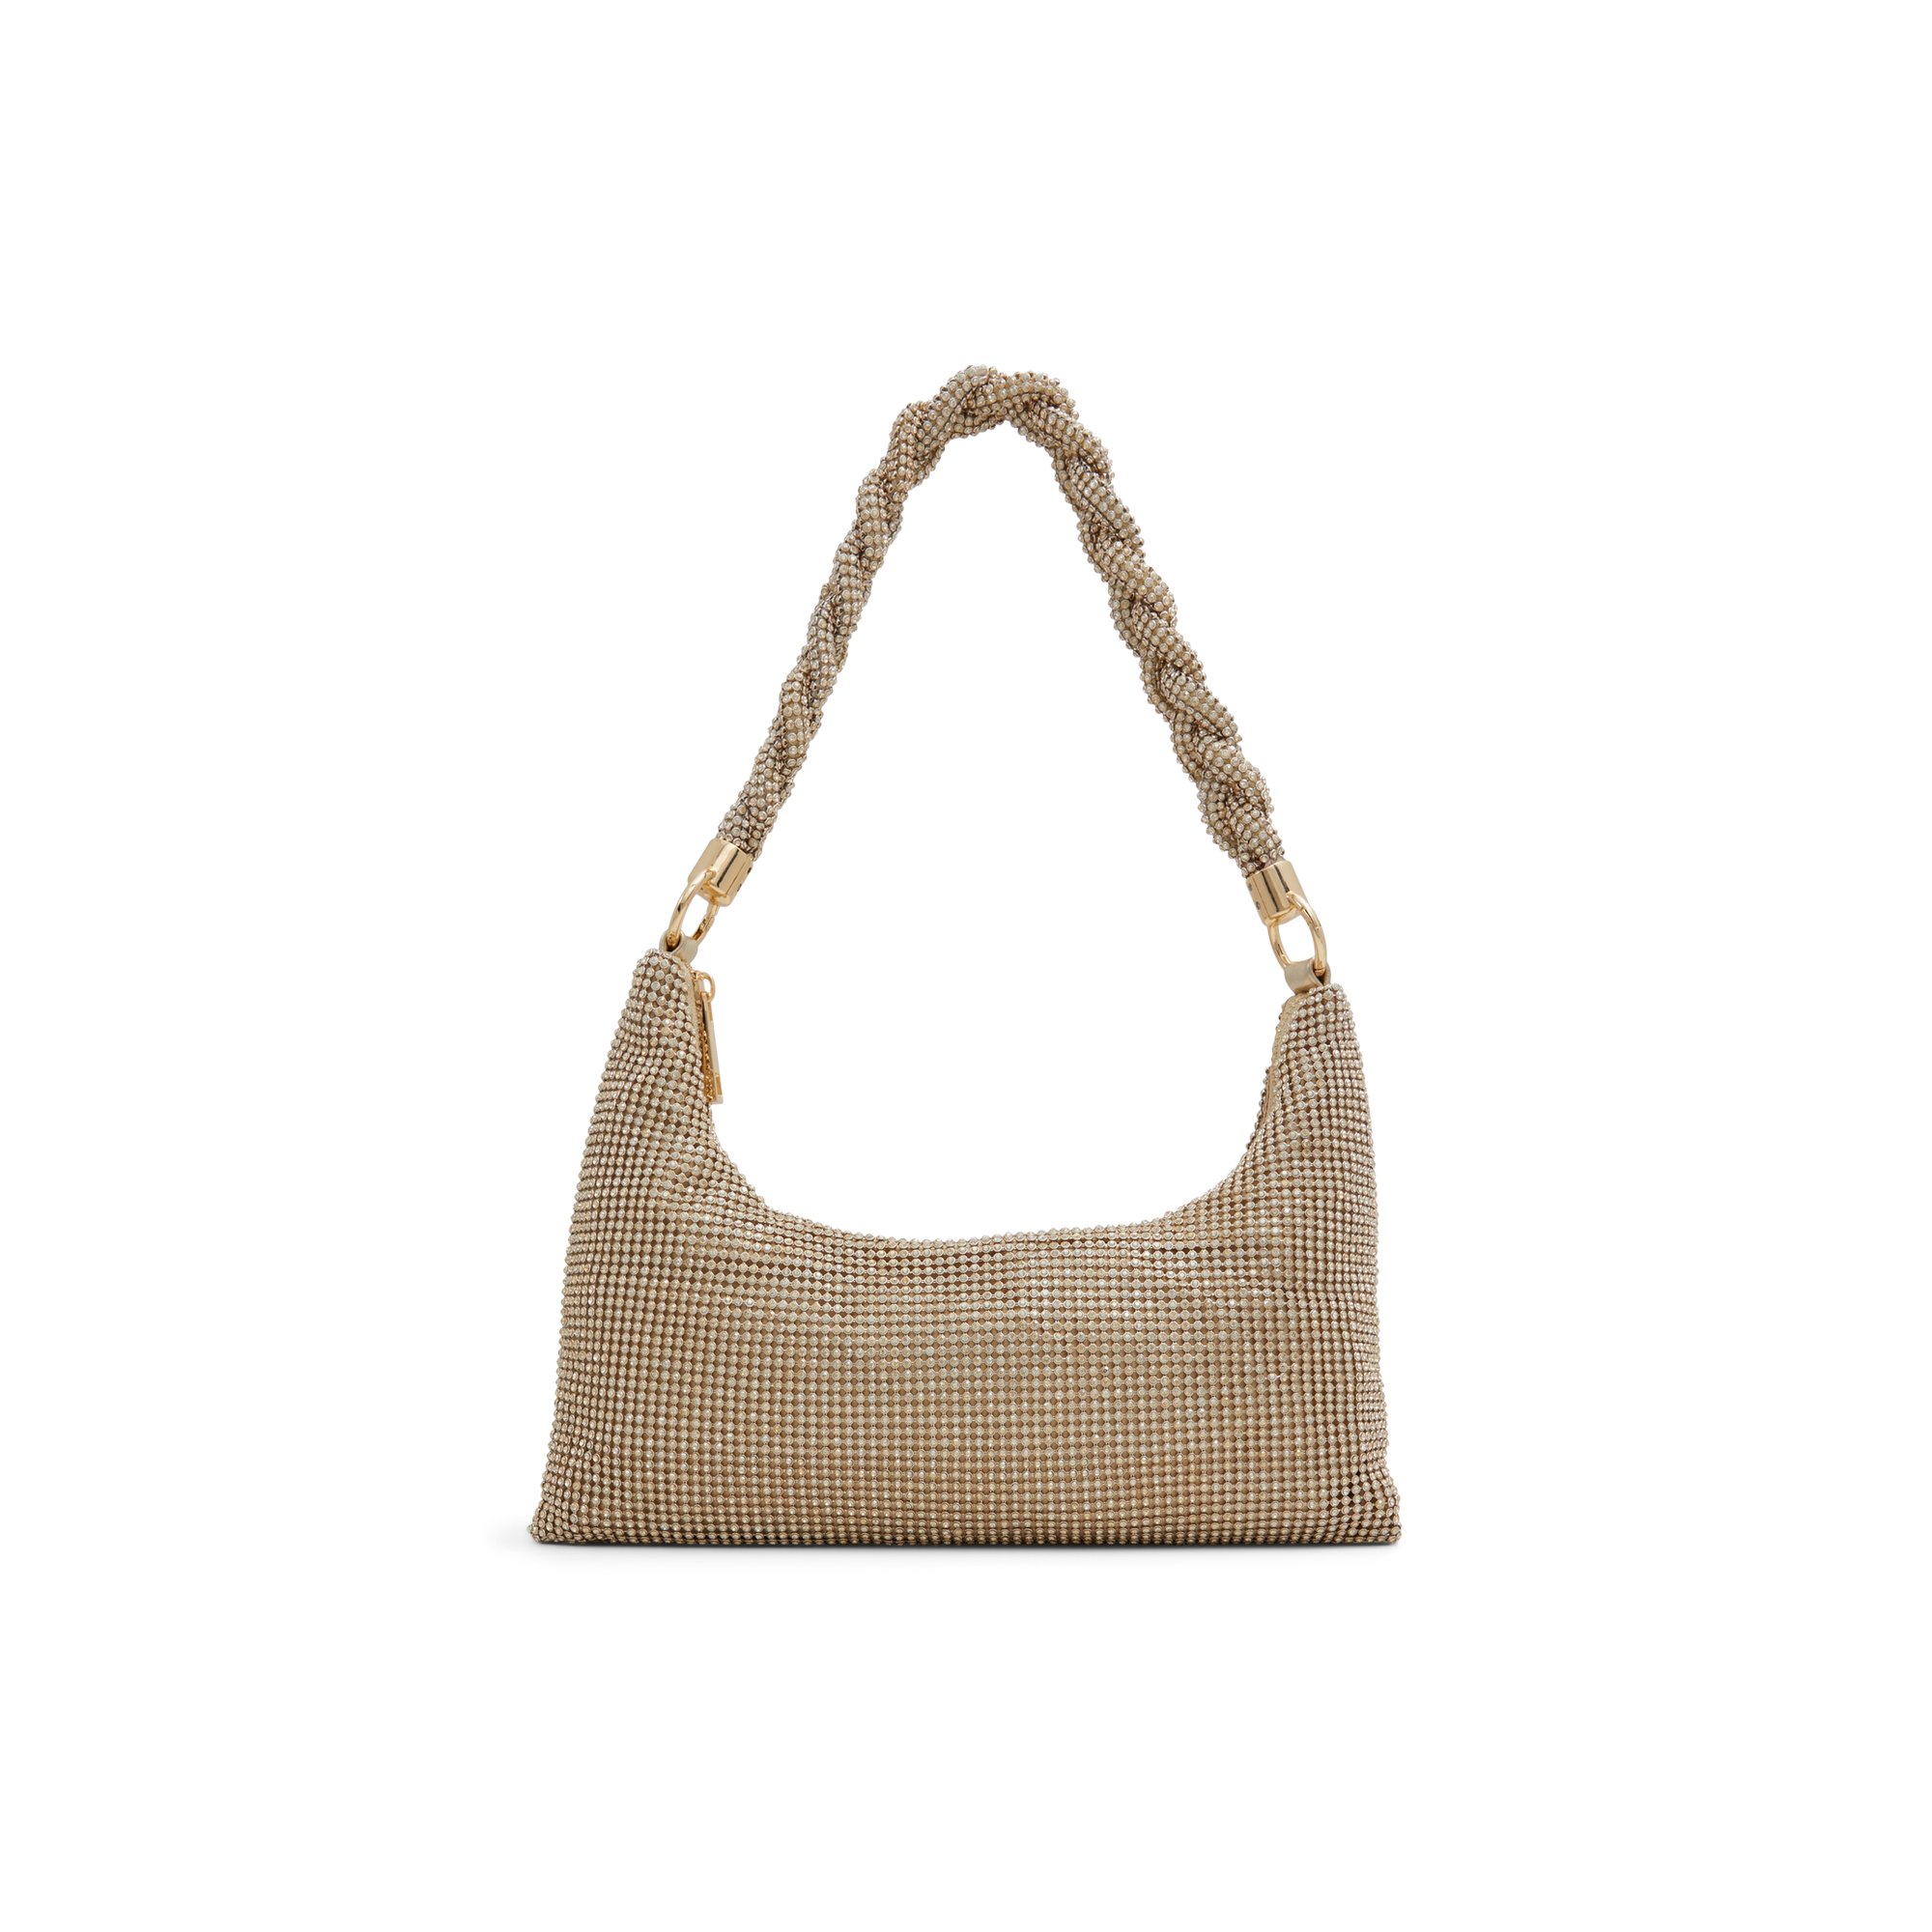 ALDO Marlysax - Women's Shoulder Bag Handbag - Gold